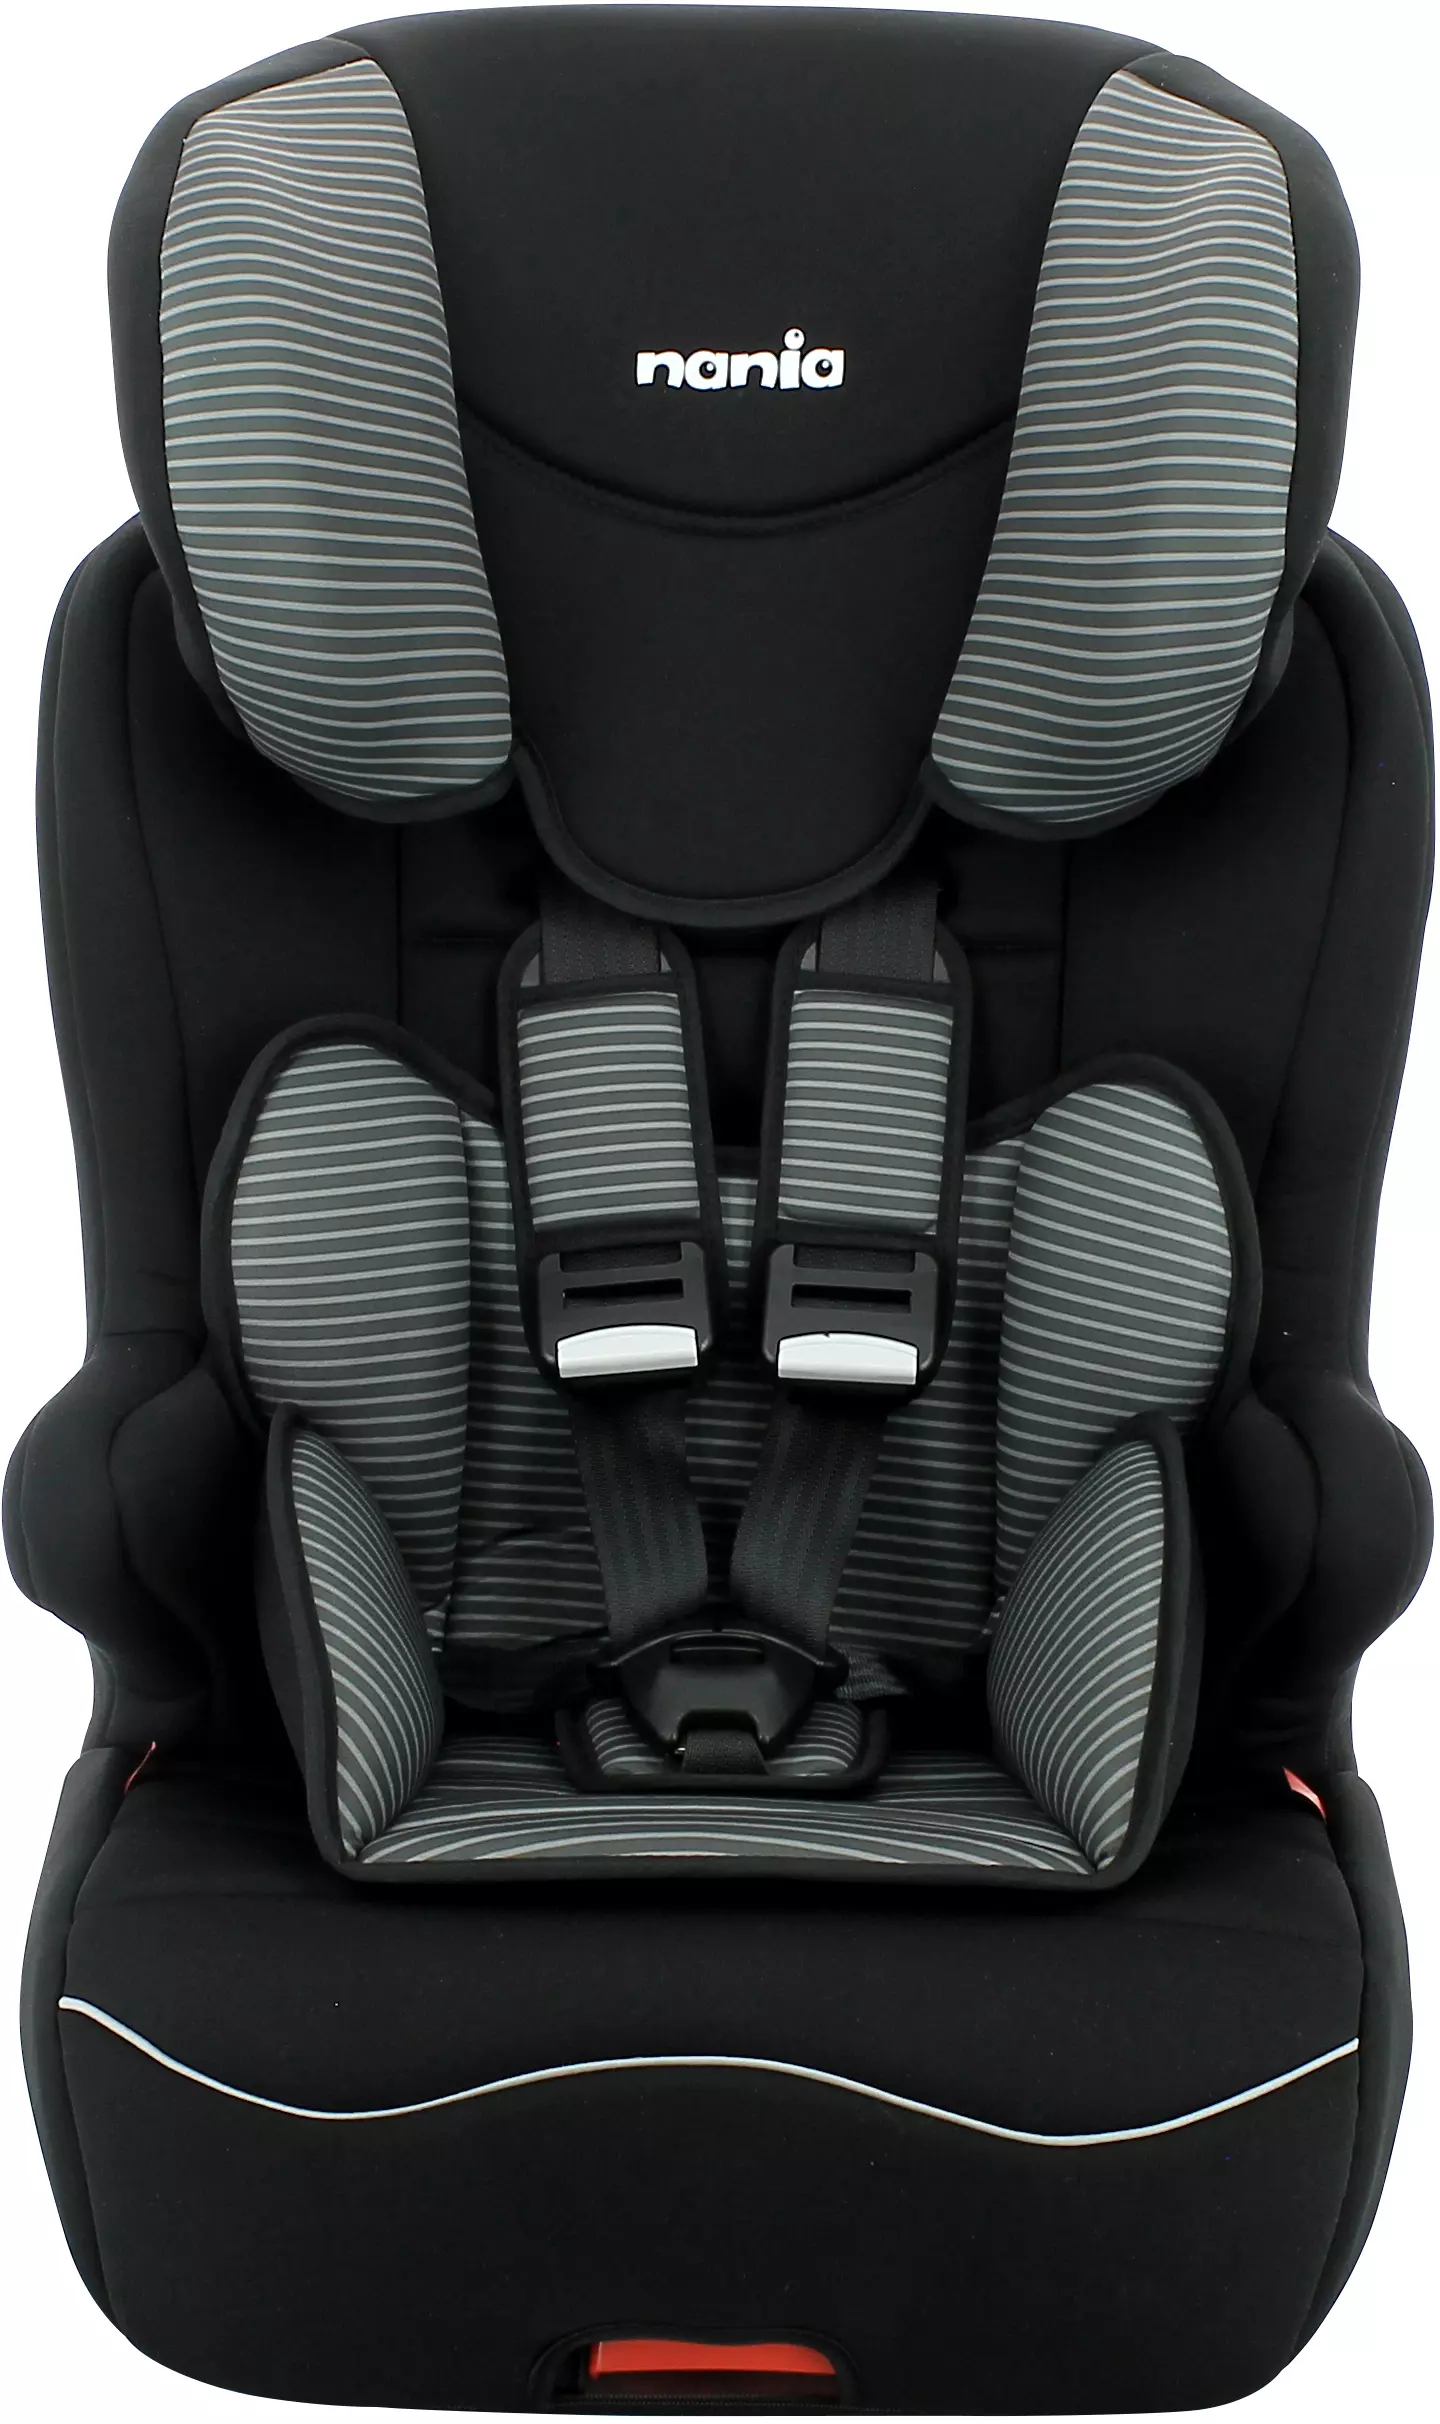 isofix stage 2 car seat